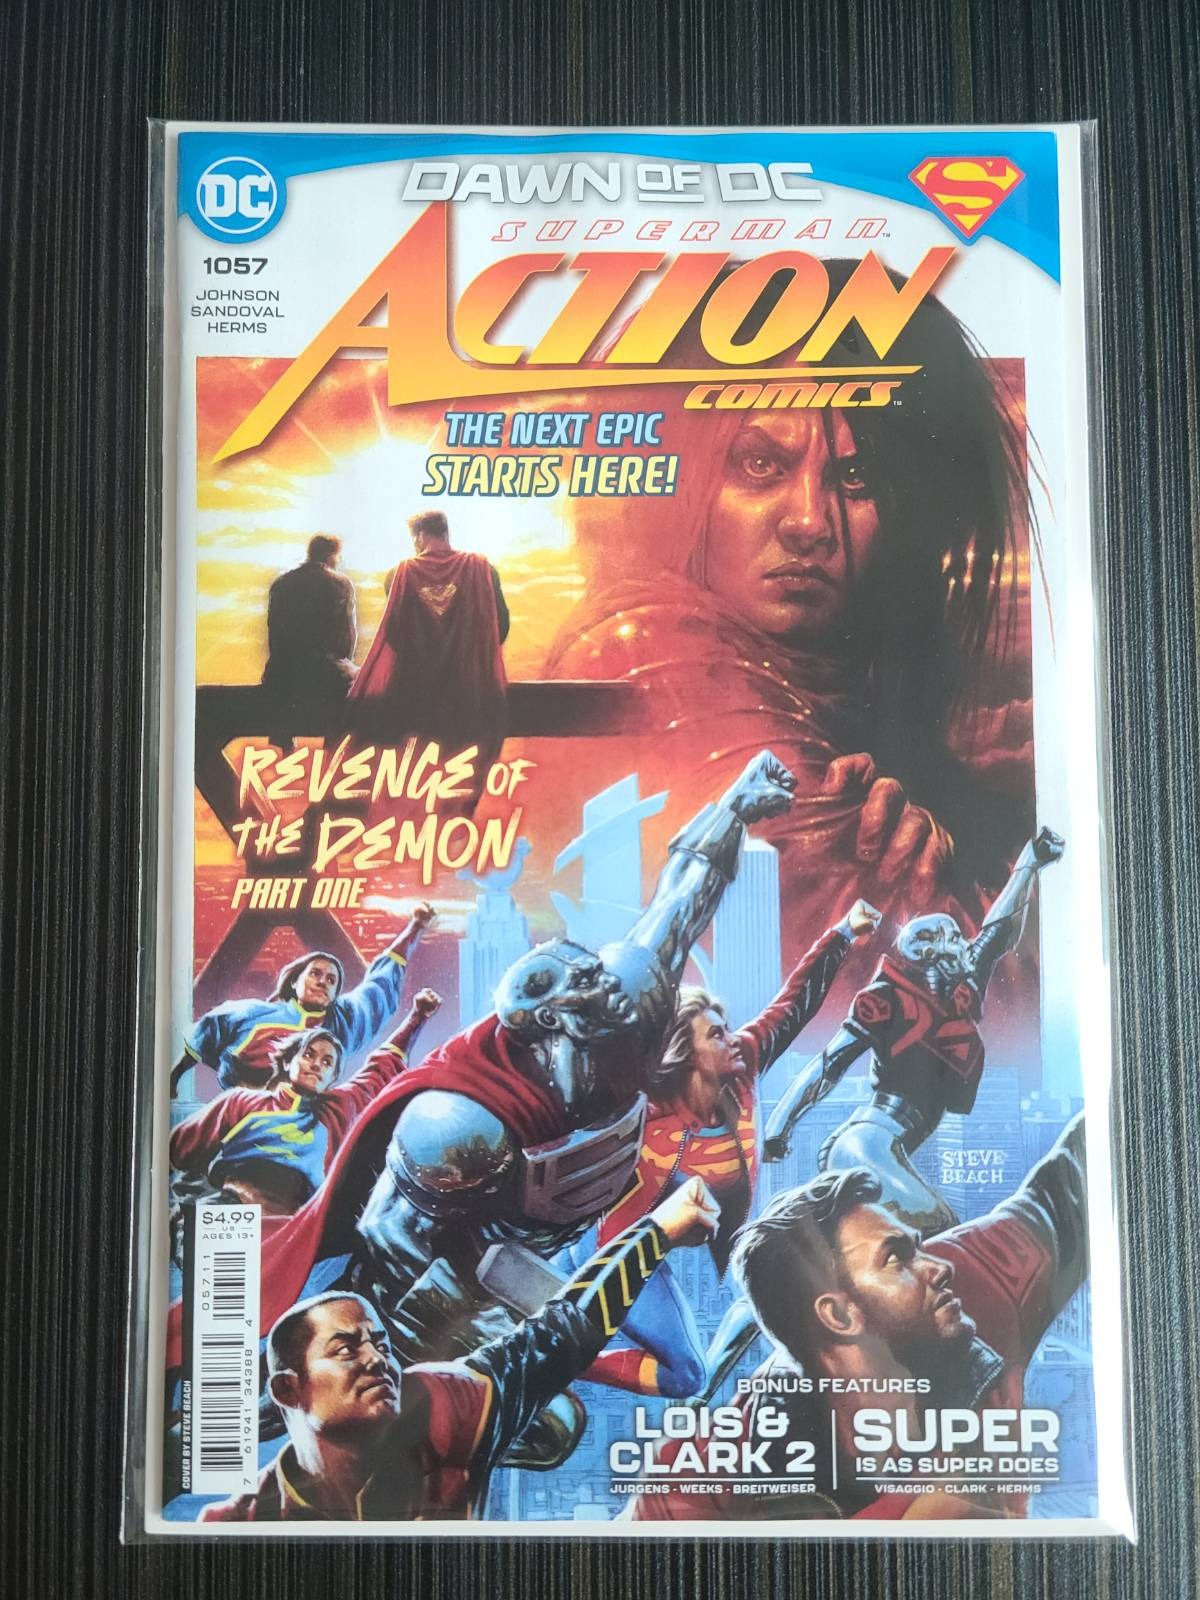 Action Comics #1057 Cover A Steve Beach